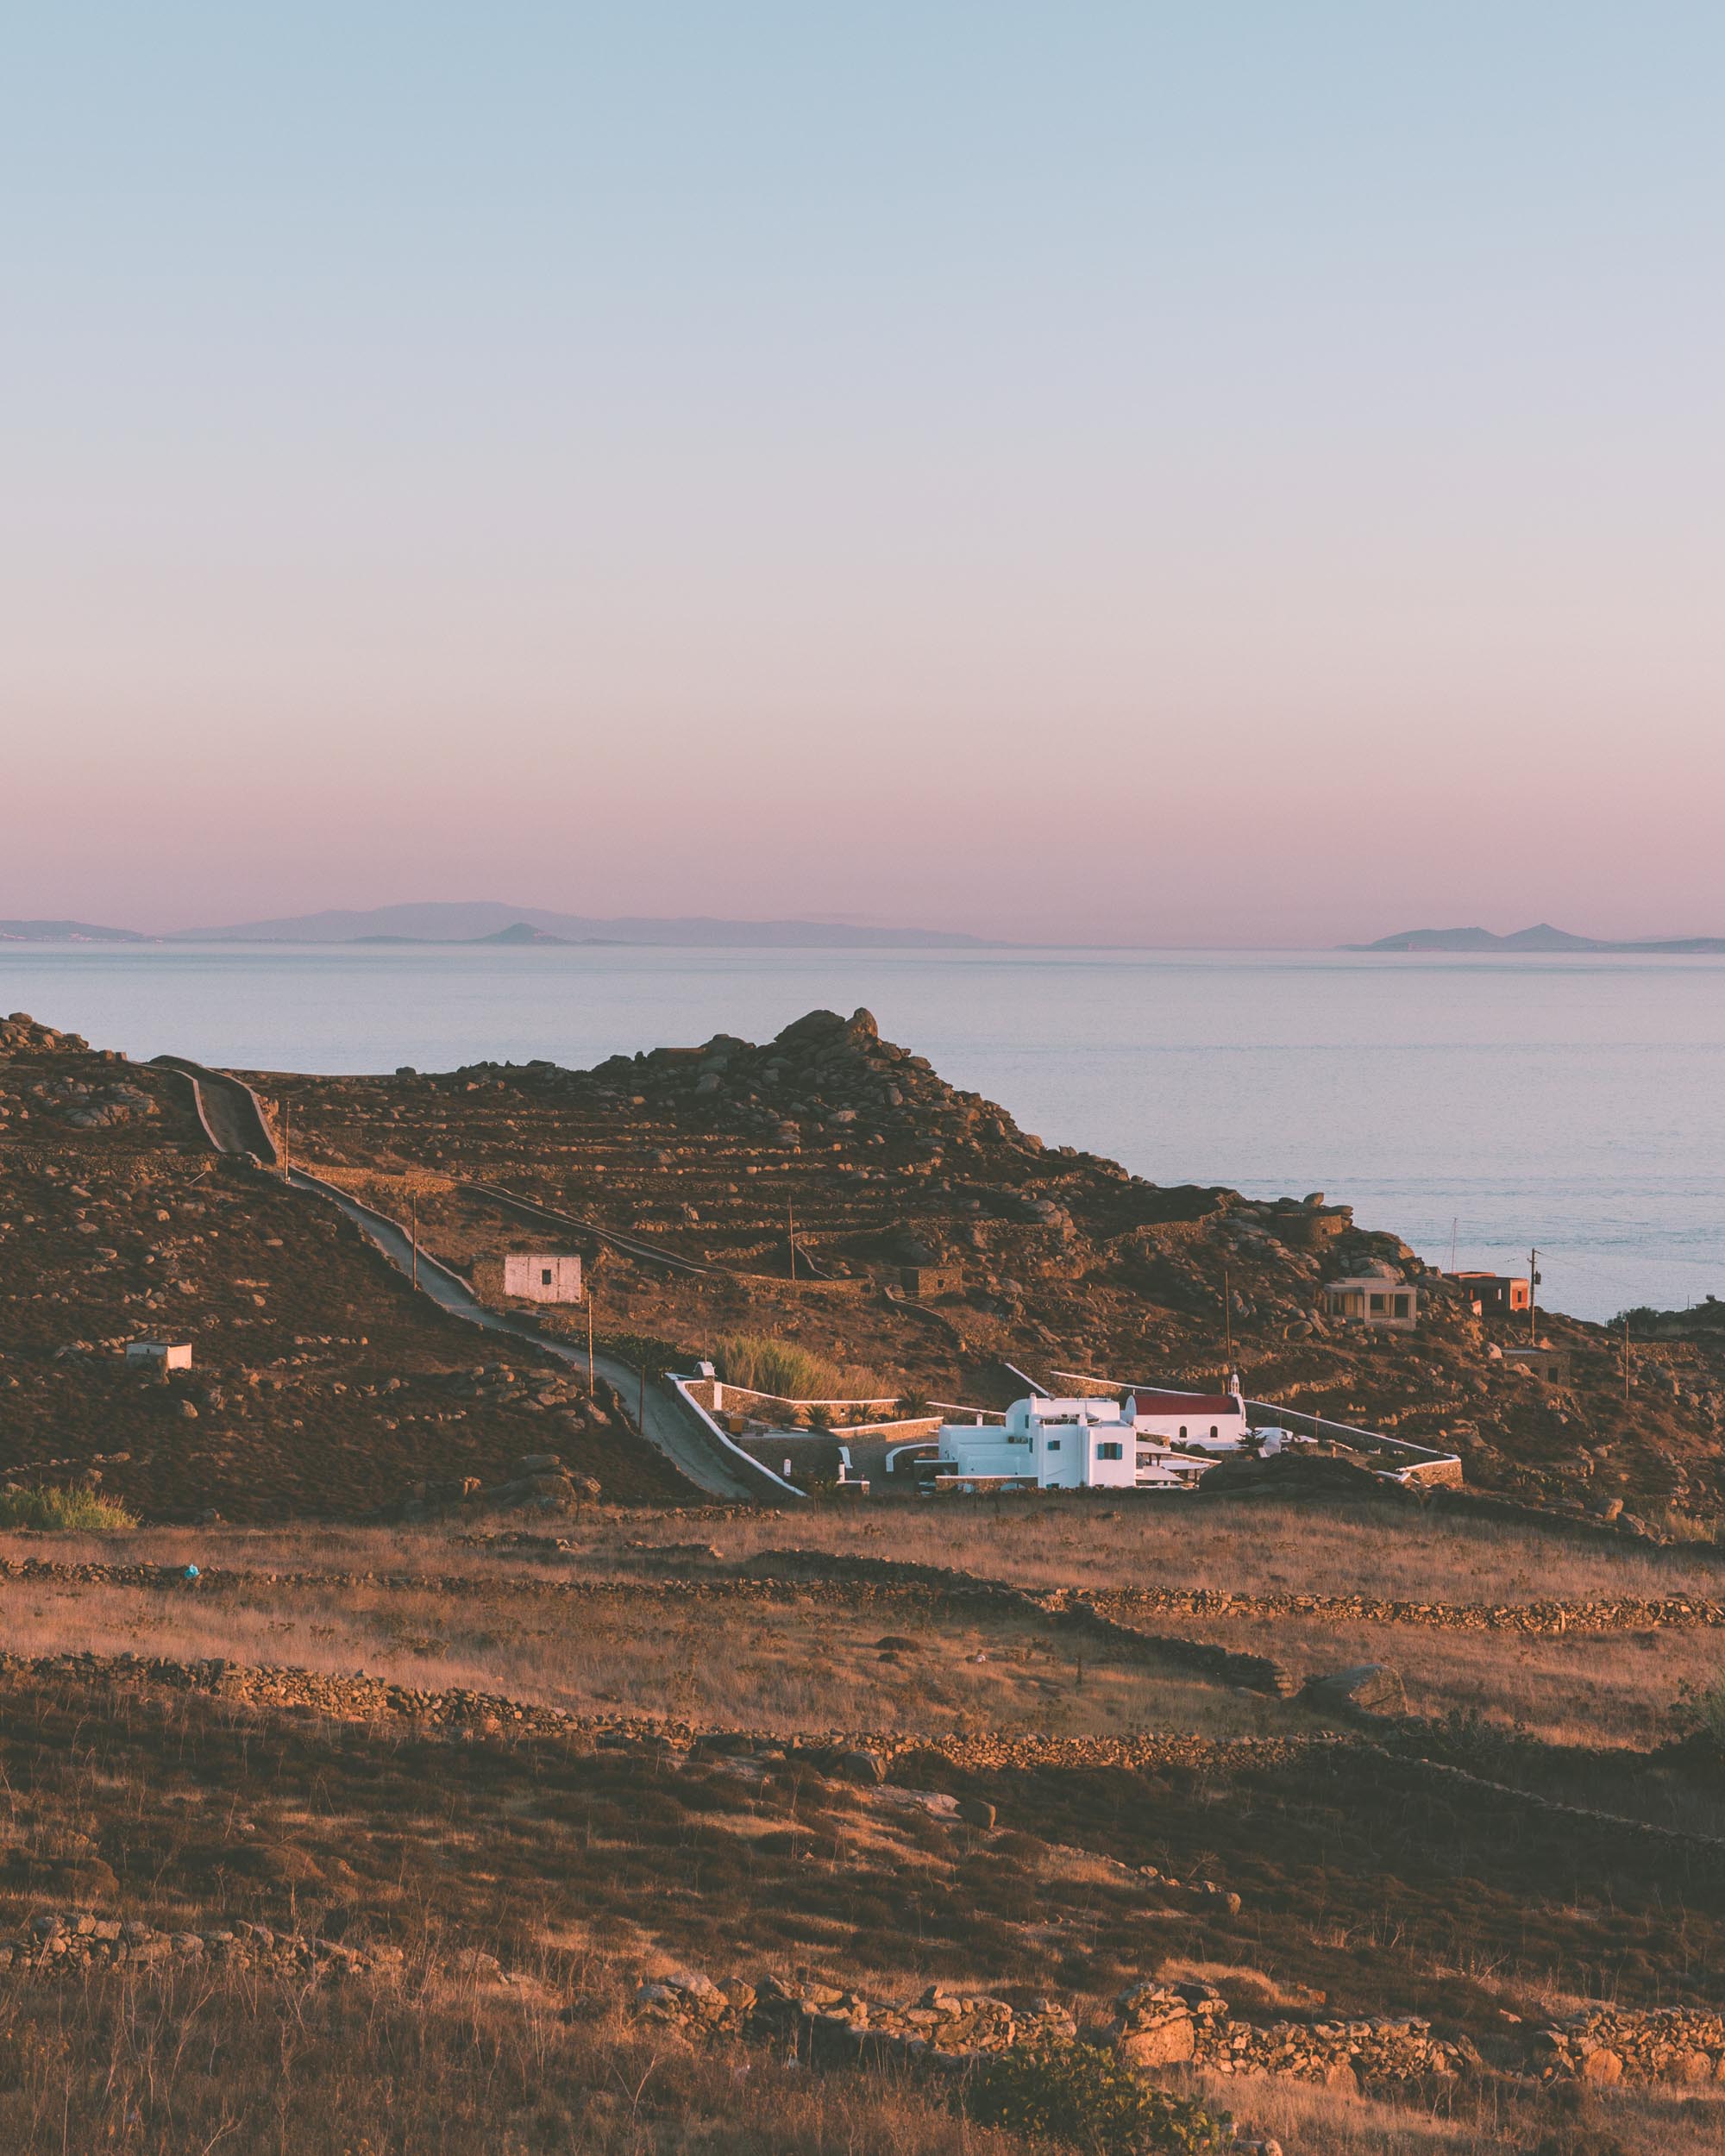 How To Choose The Best Greek Islands To Visit - Mykonos via @finduslost